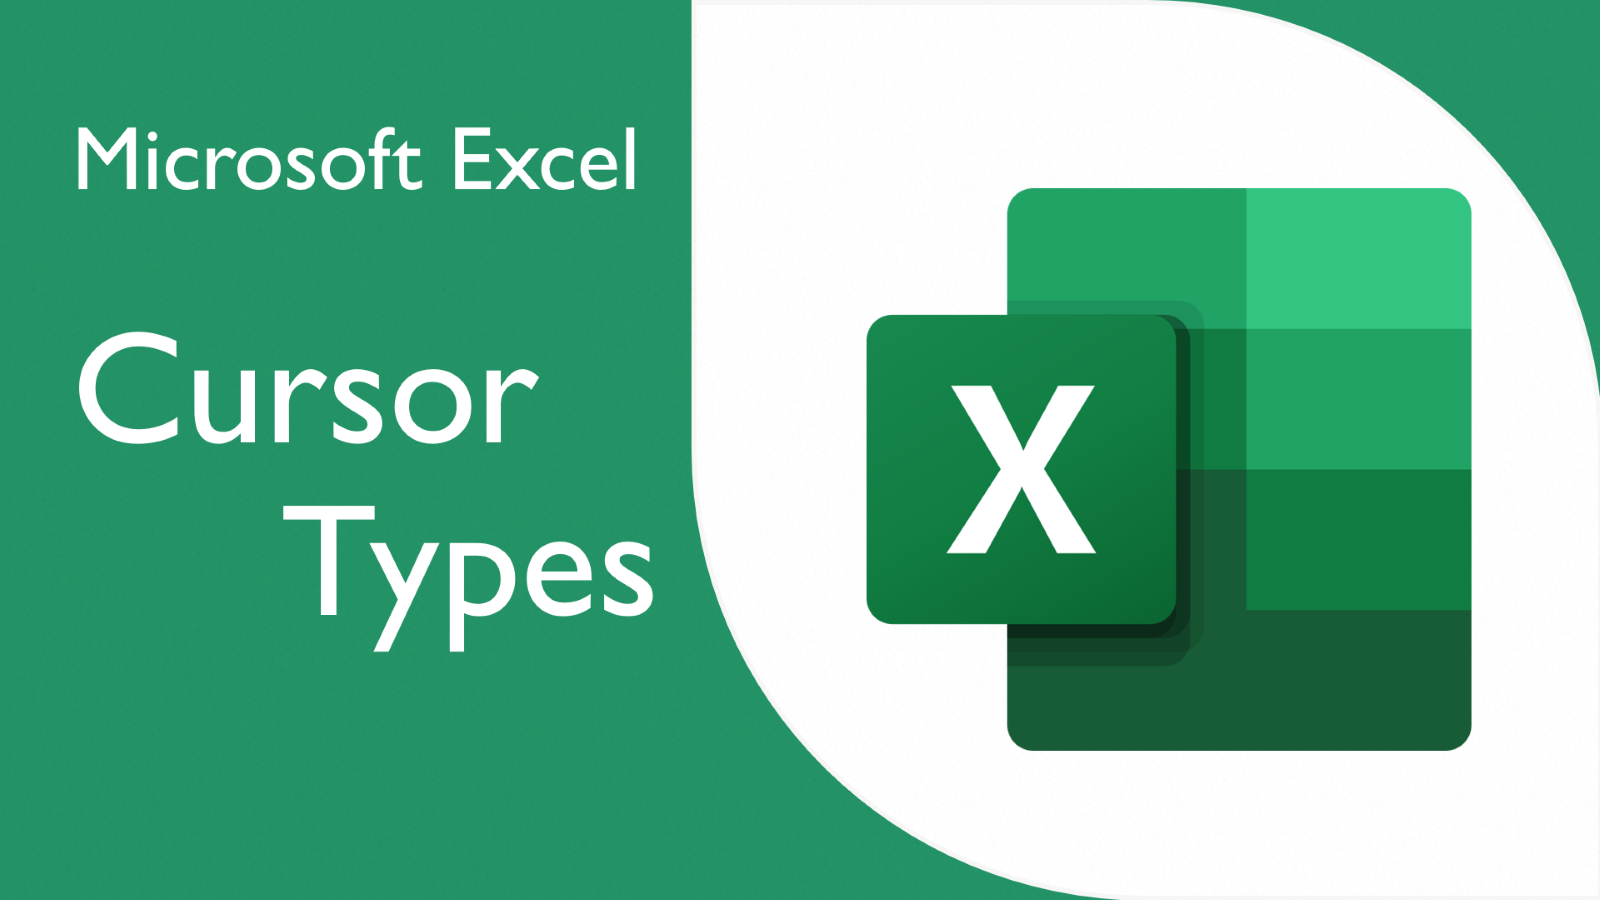 Microsoft Excel Cursor Types Video on KnowledgeWave